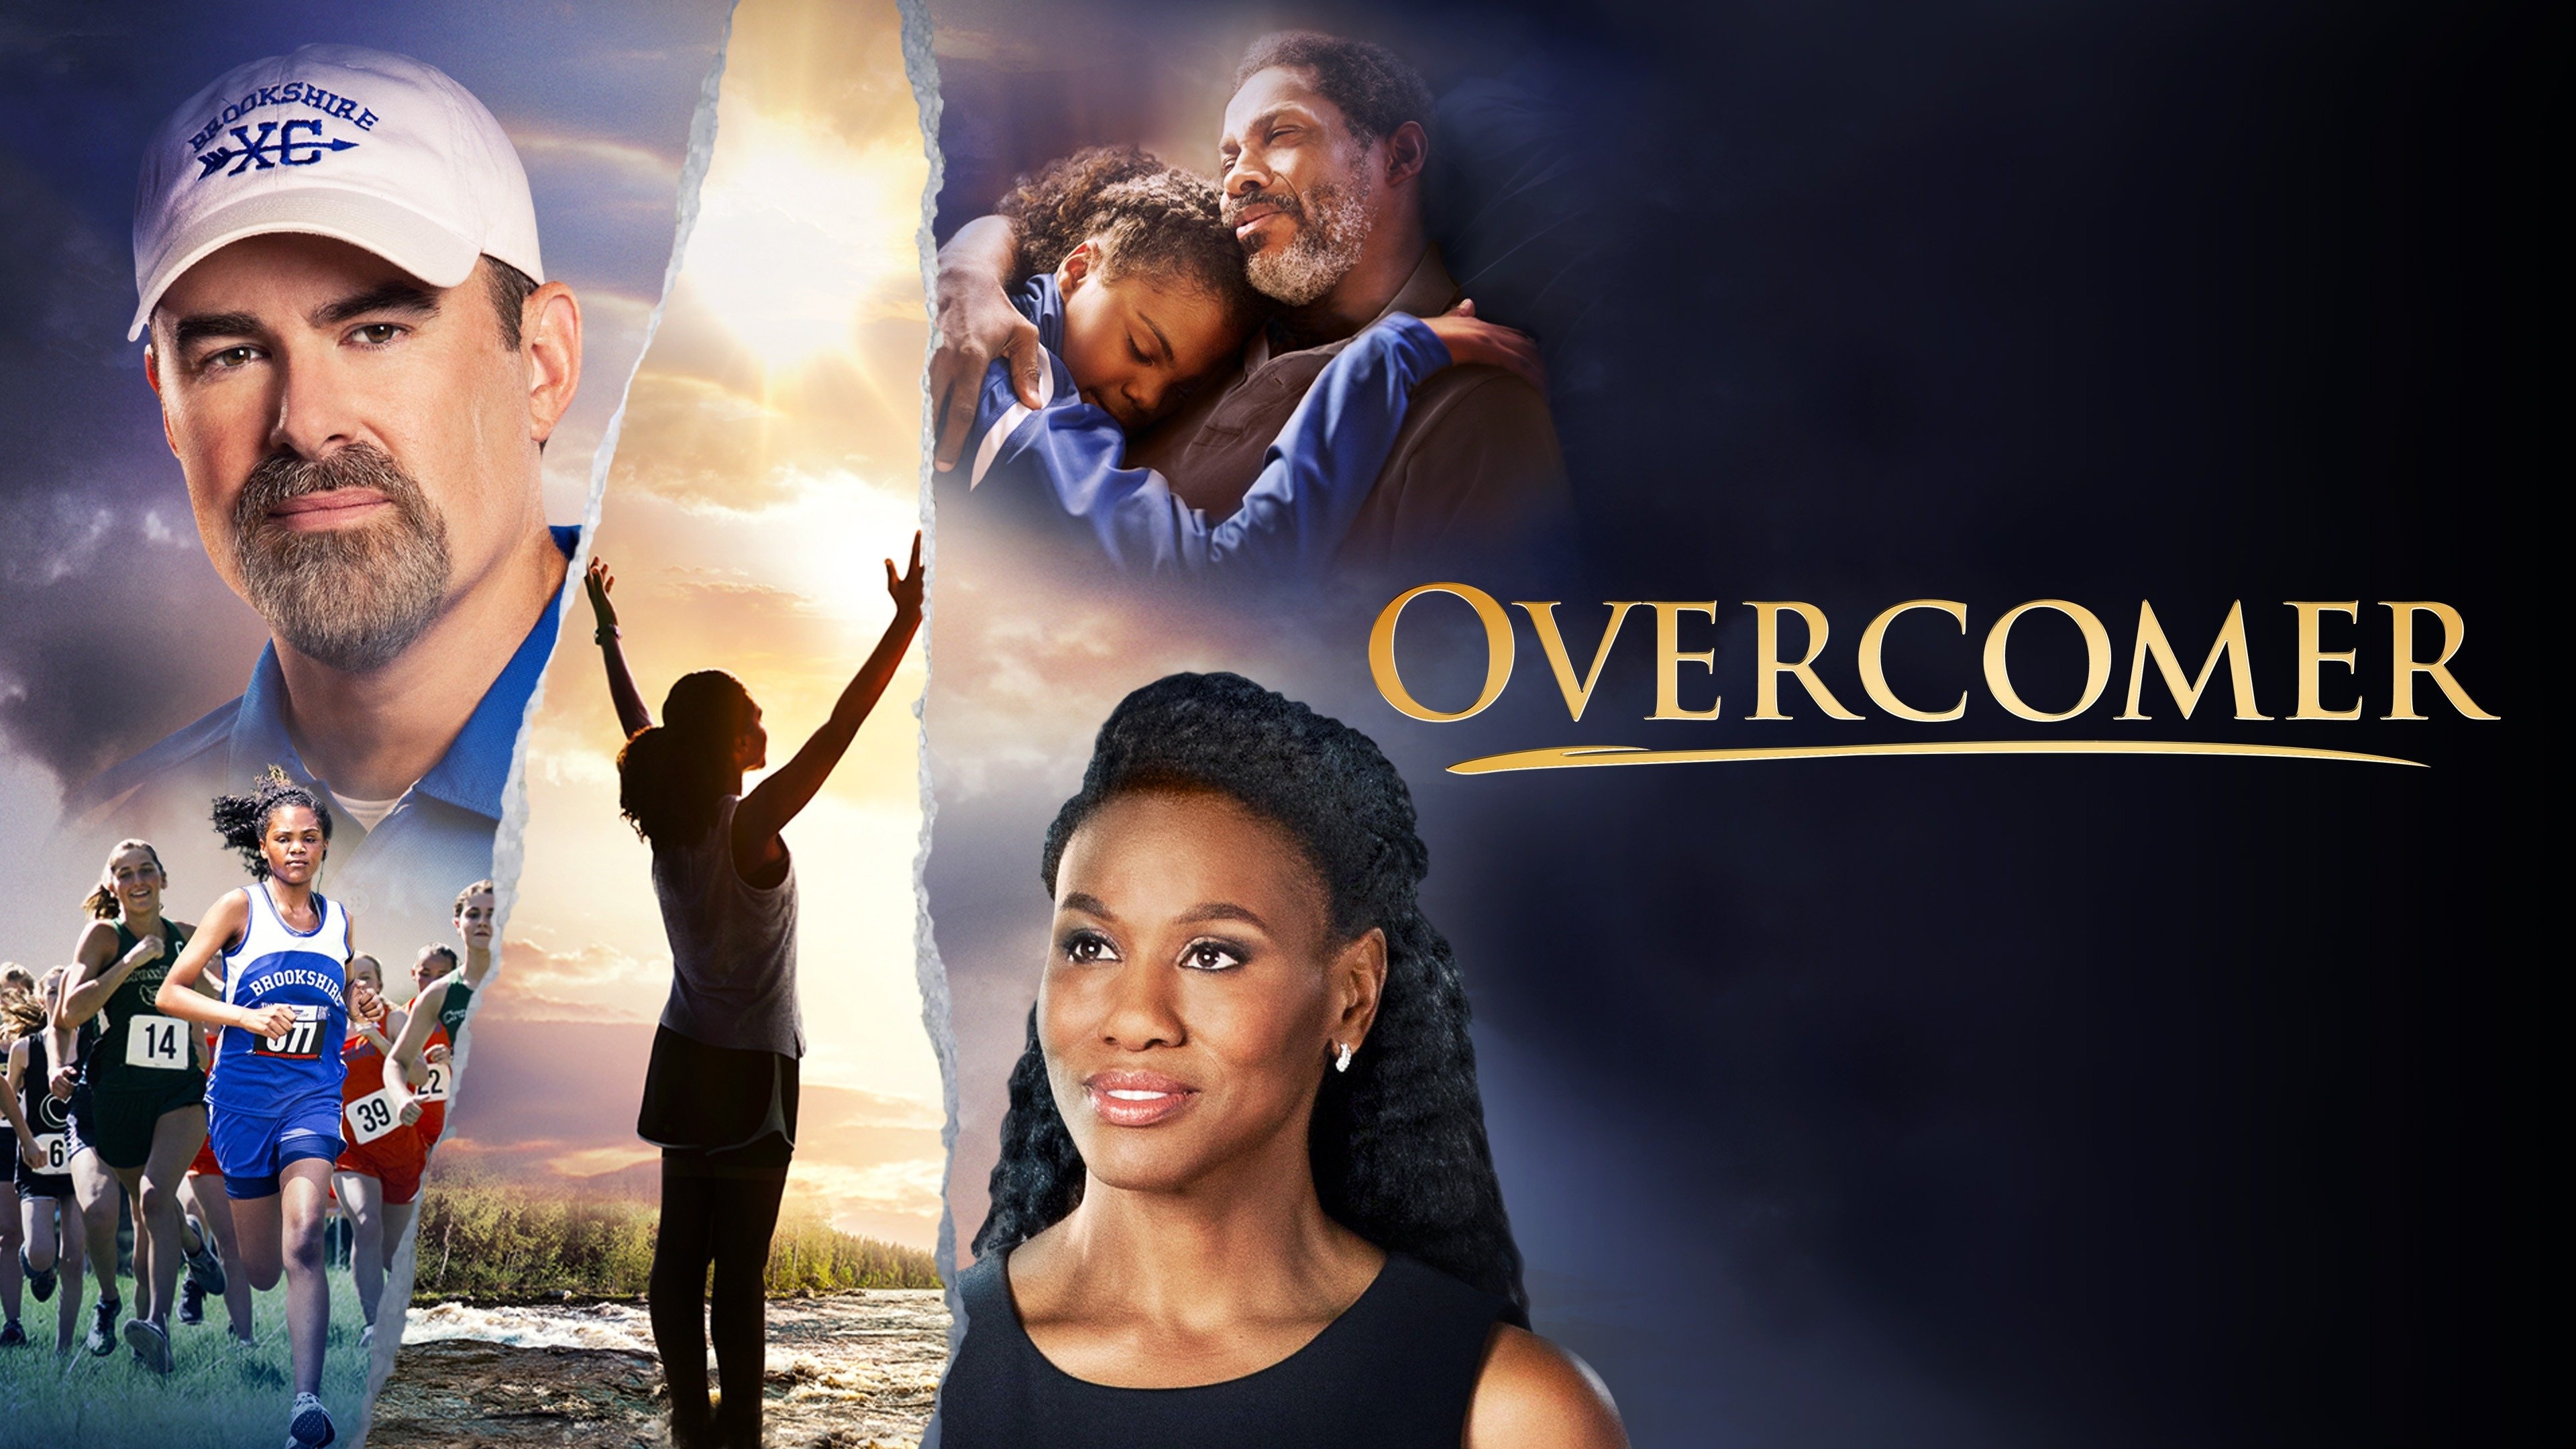 Overcomer 2019, Watch full movie, Online plex, 3840x2160 4K Desktop